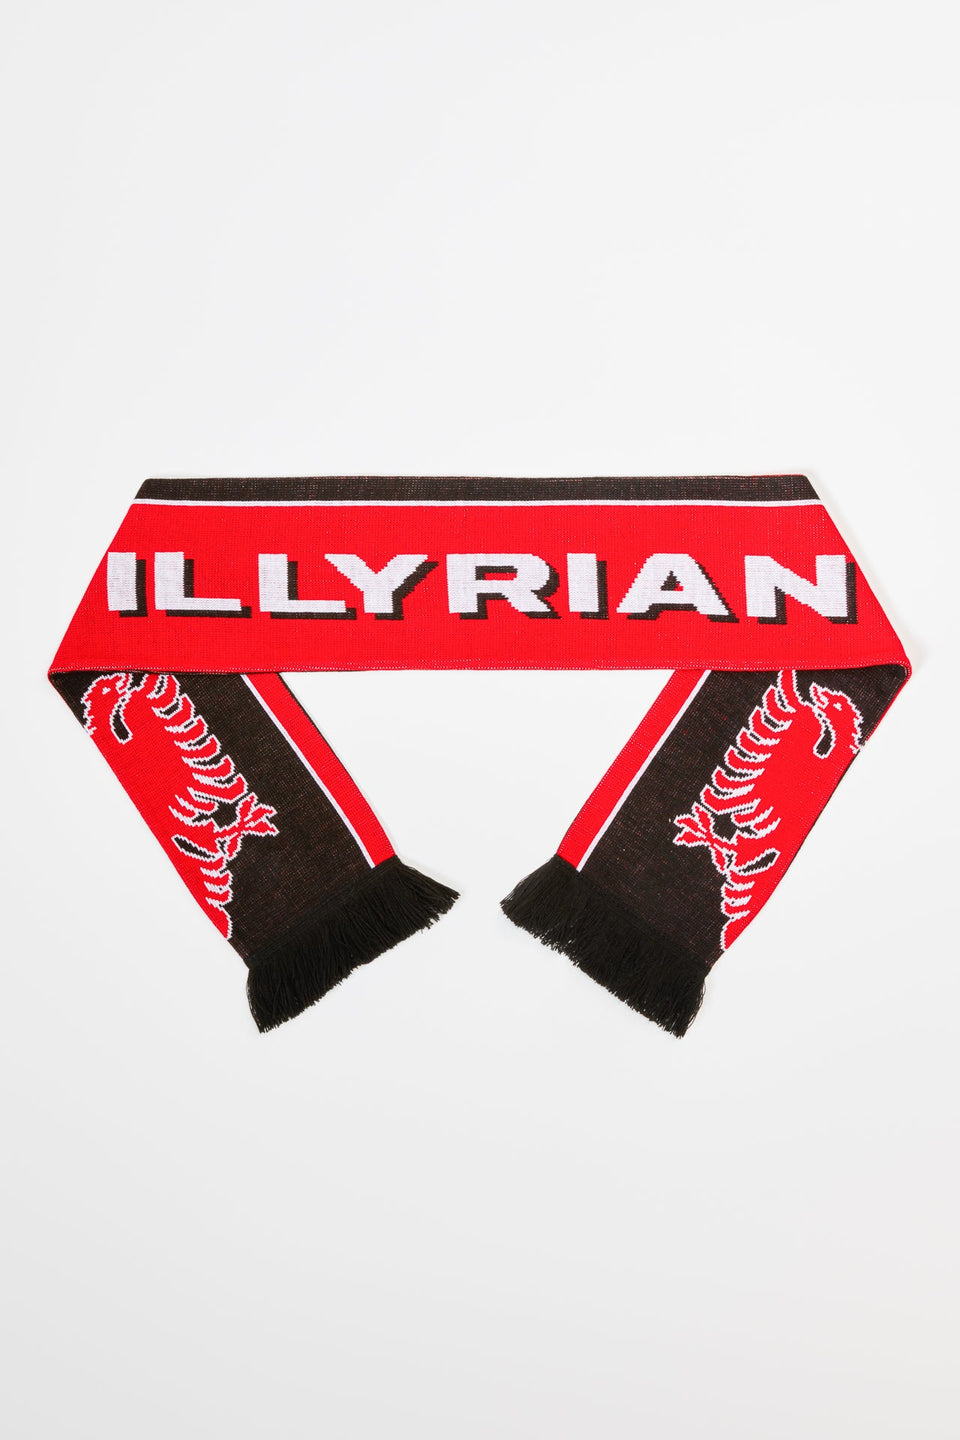 Albanian Football Scarf - Illyrian